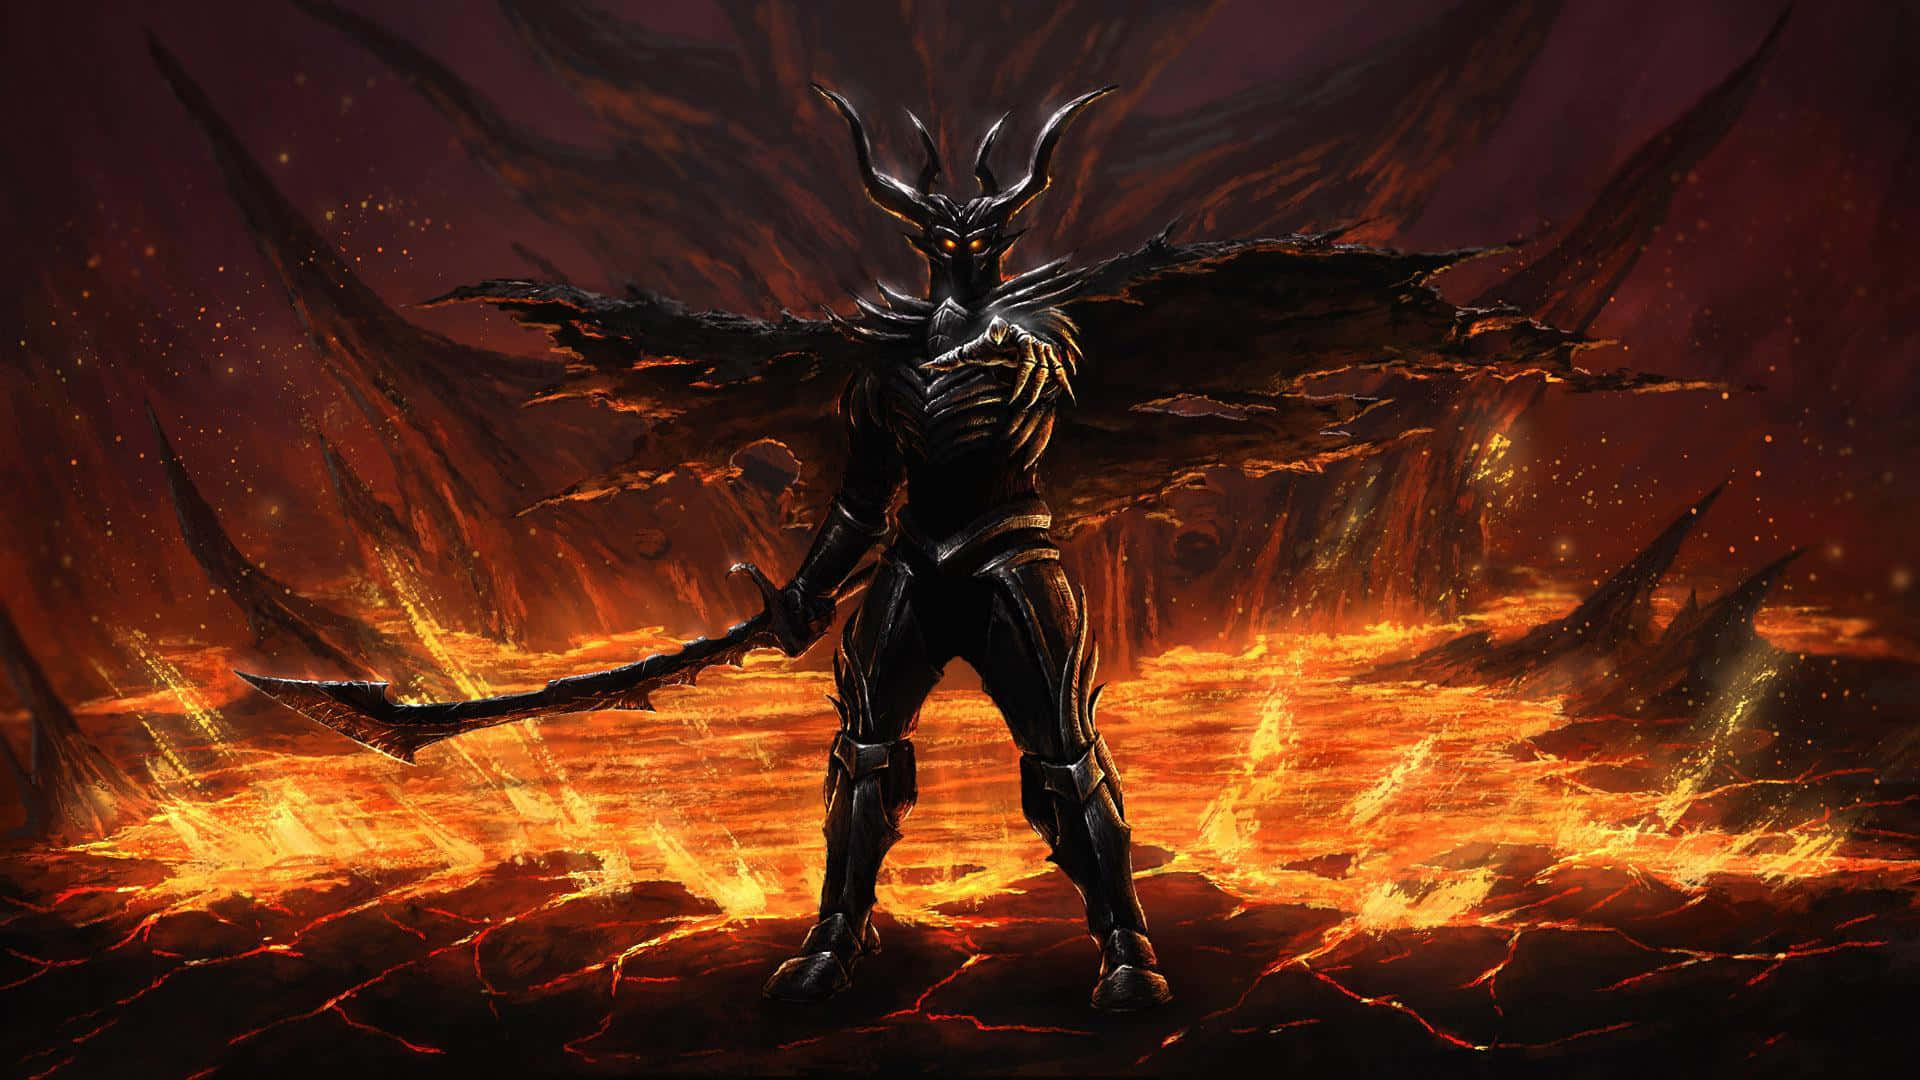 Dark Lord Sauronin Mordor Wallpaper